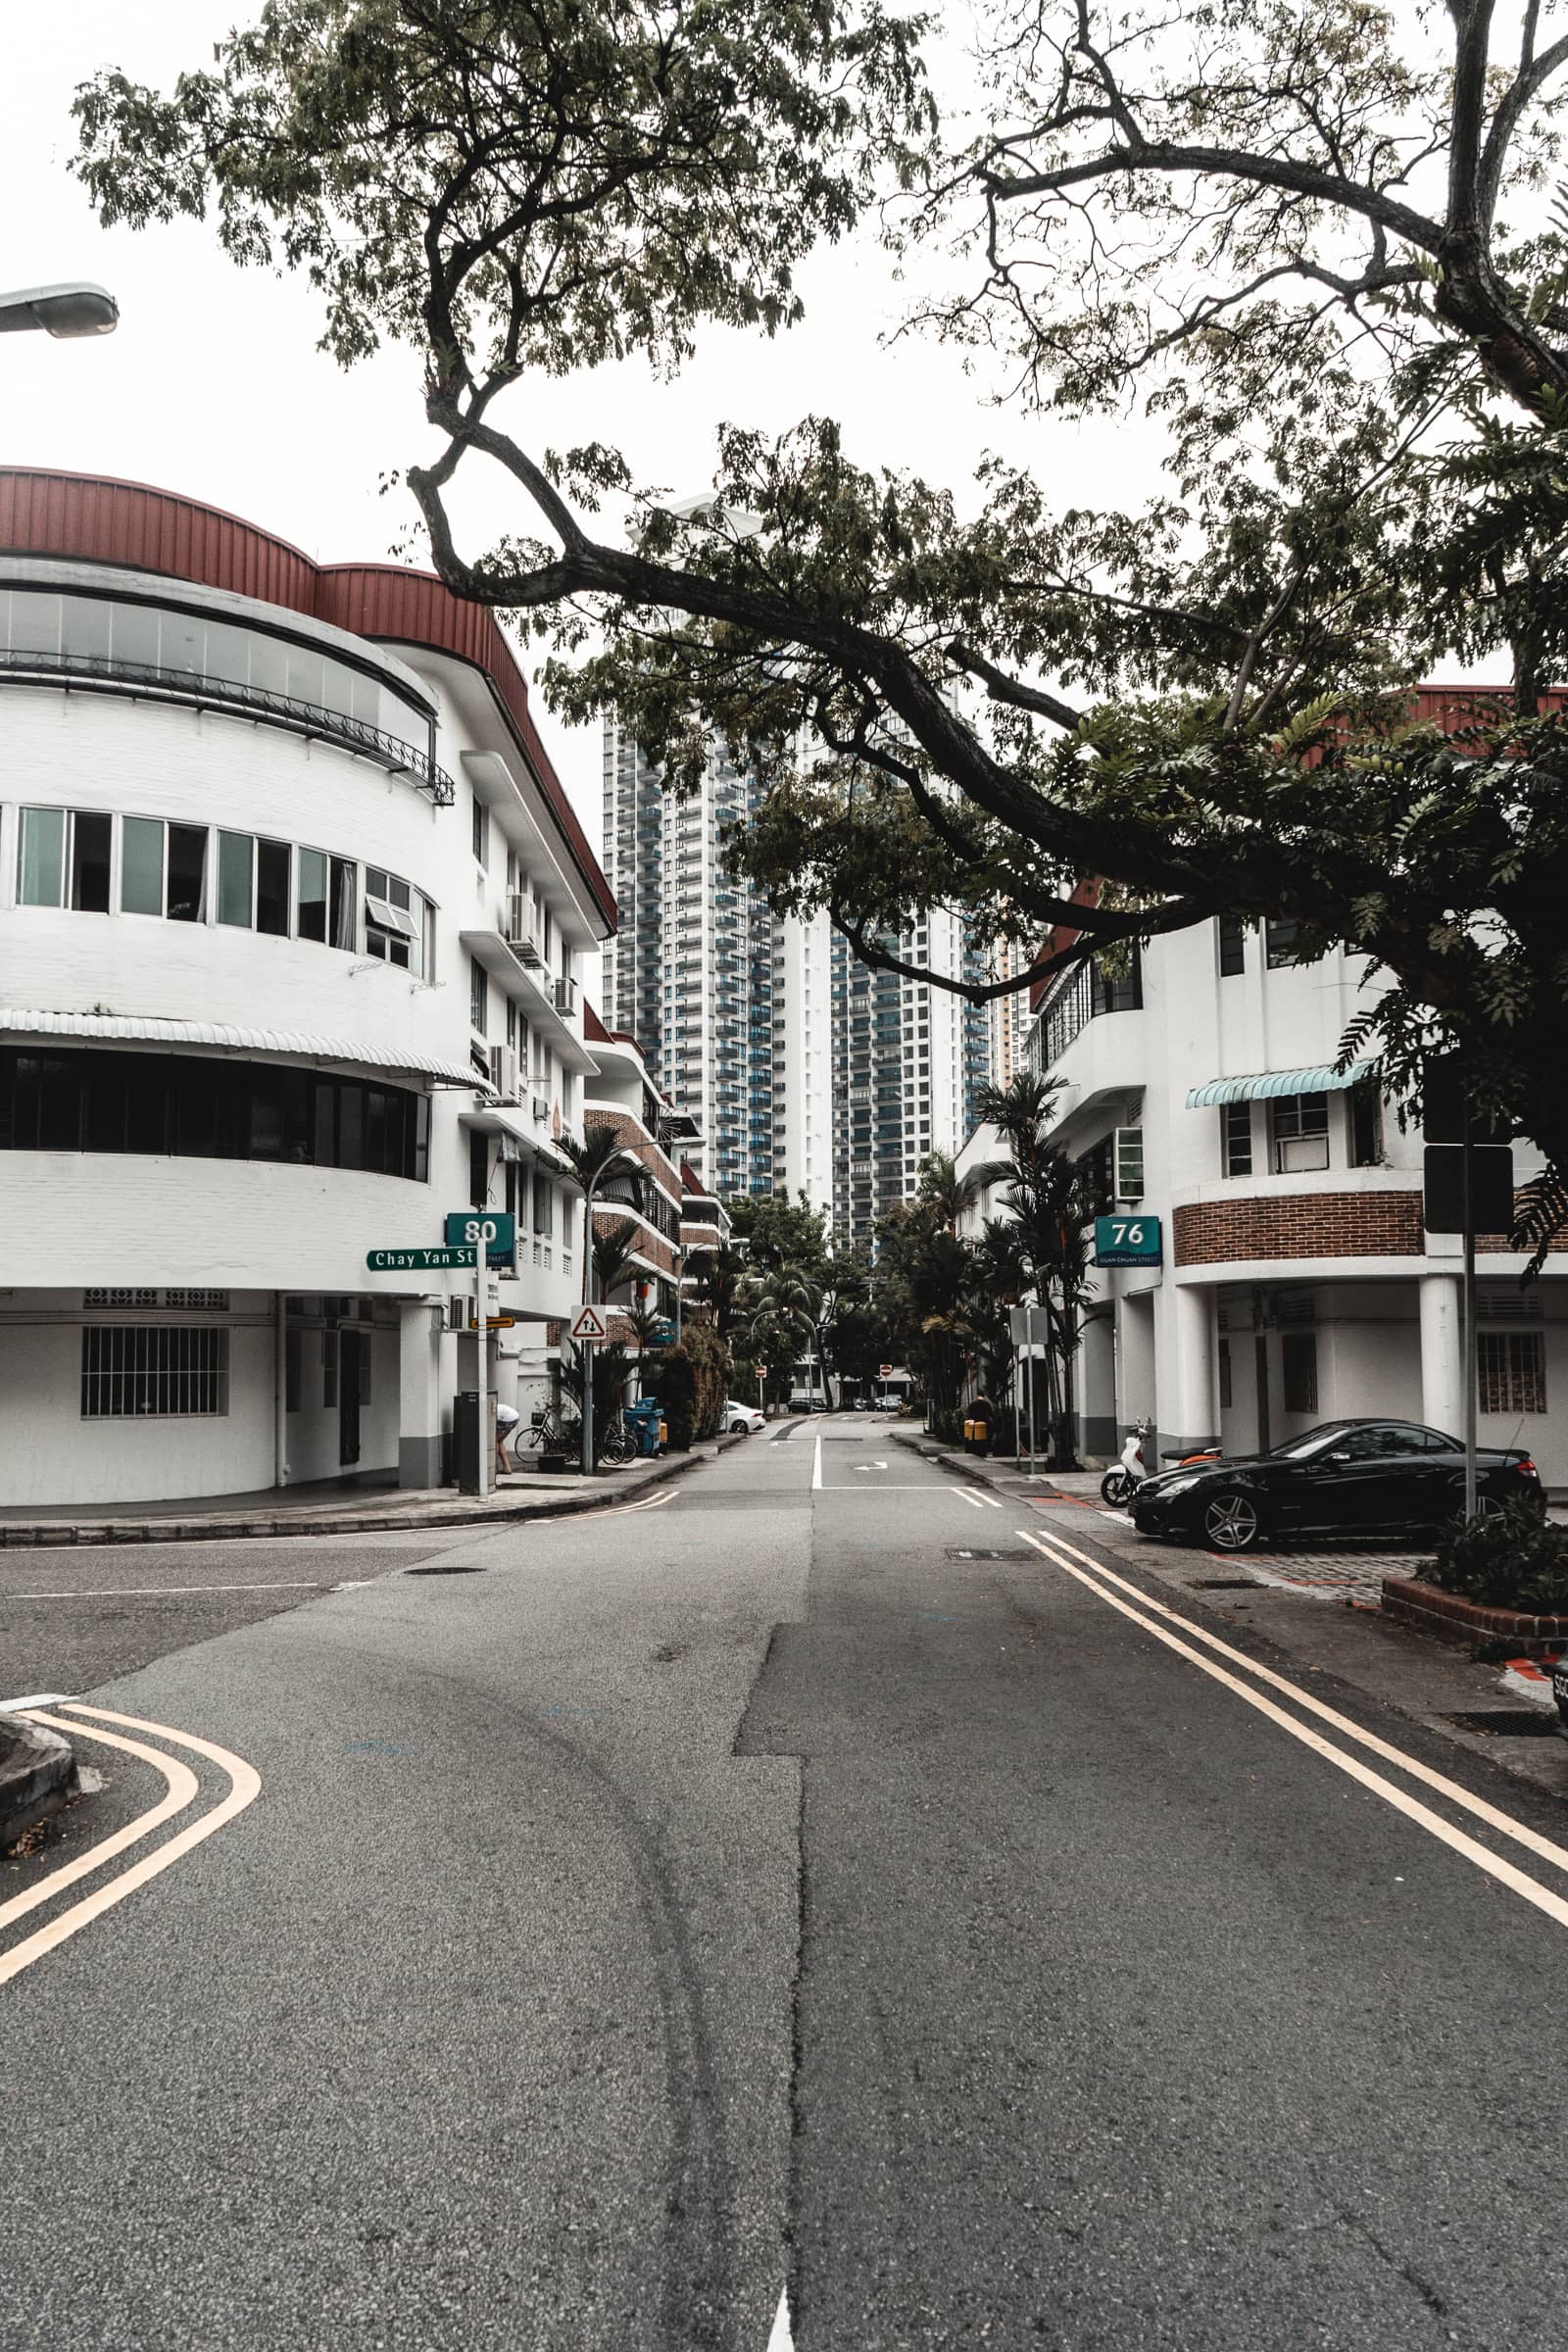 Tiong Bahru Singapore